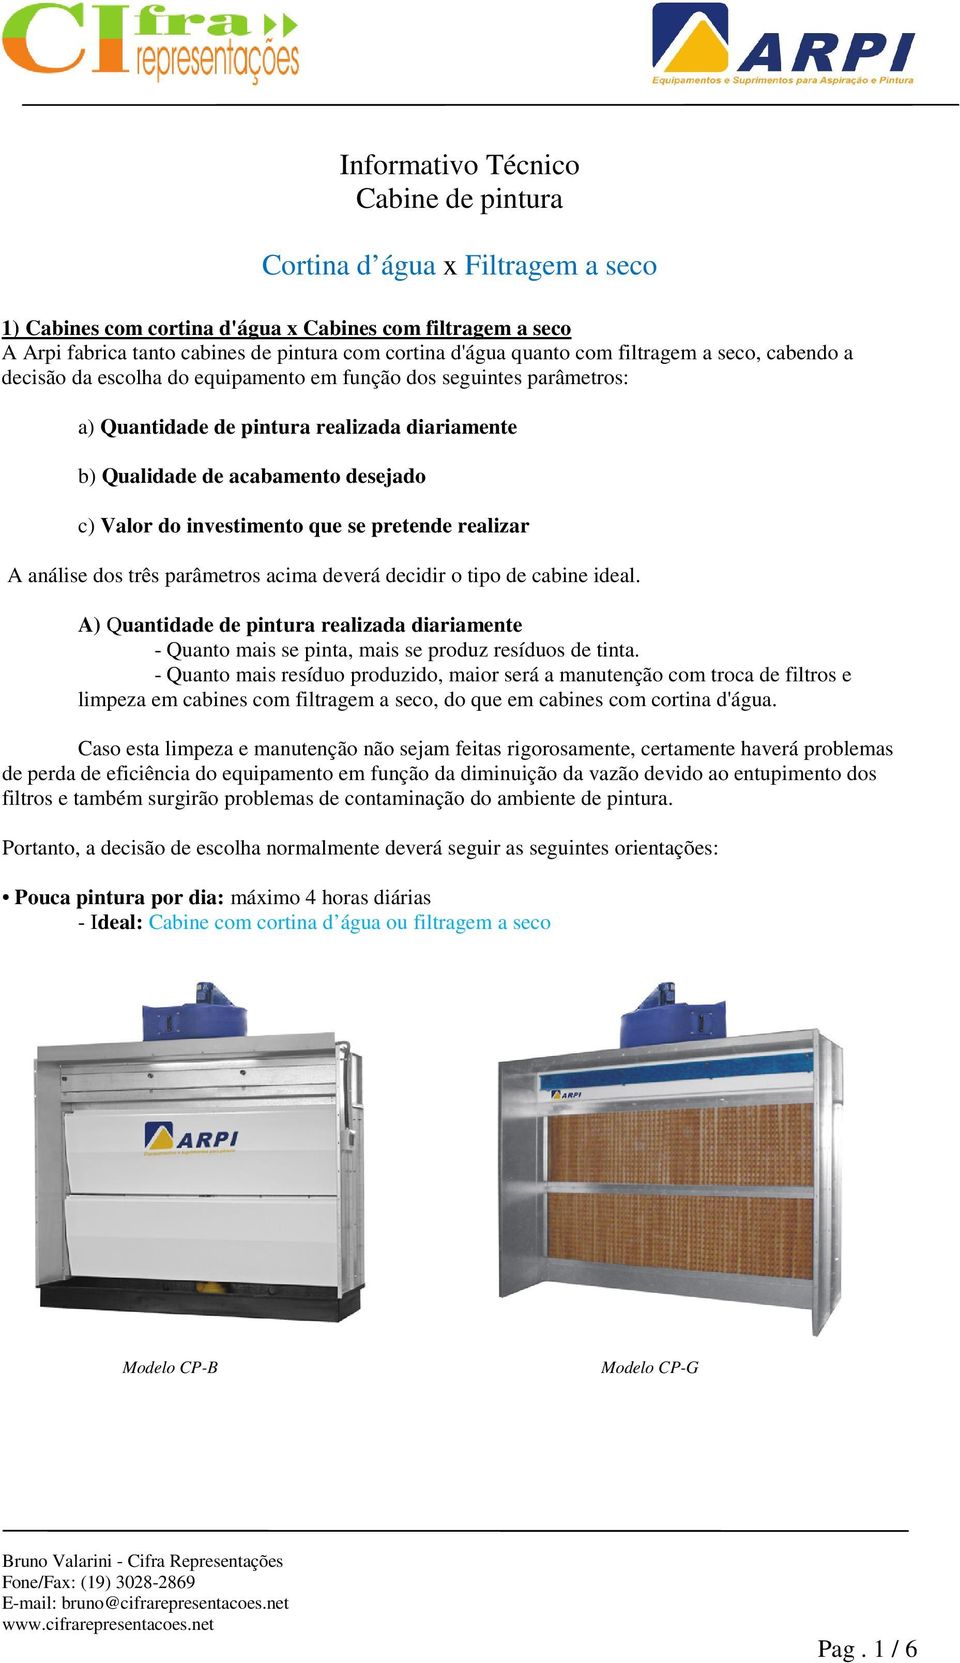 Informativo Técnico Cabine de pintura. Cortina d água x Filtragem a seco -  PDF Download grátis